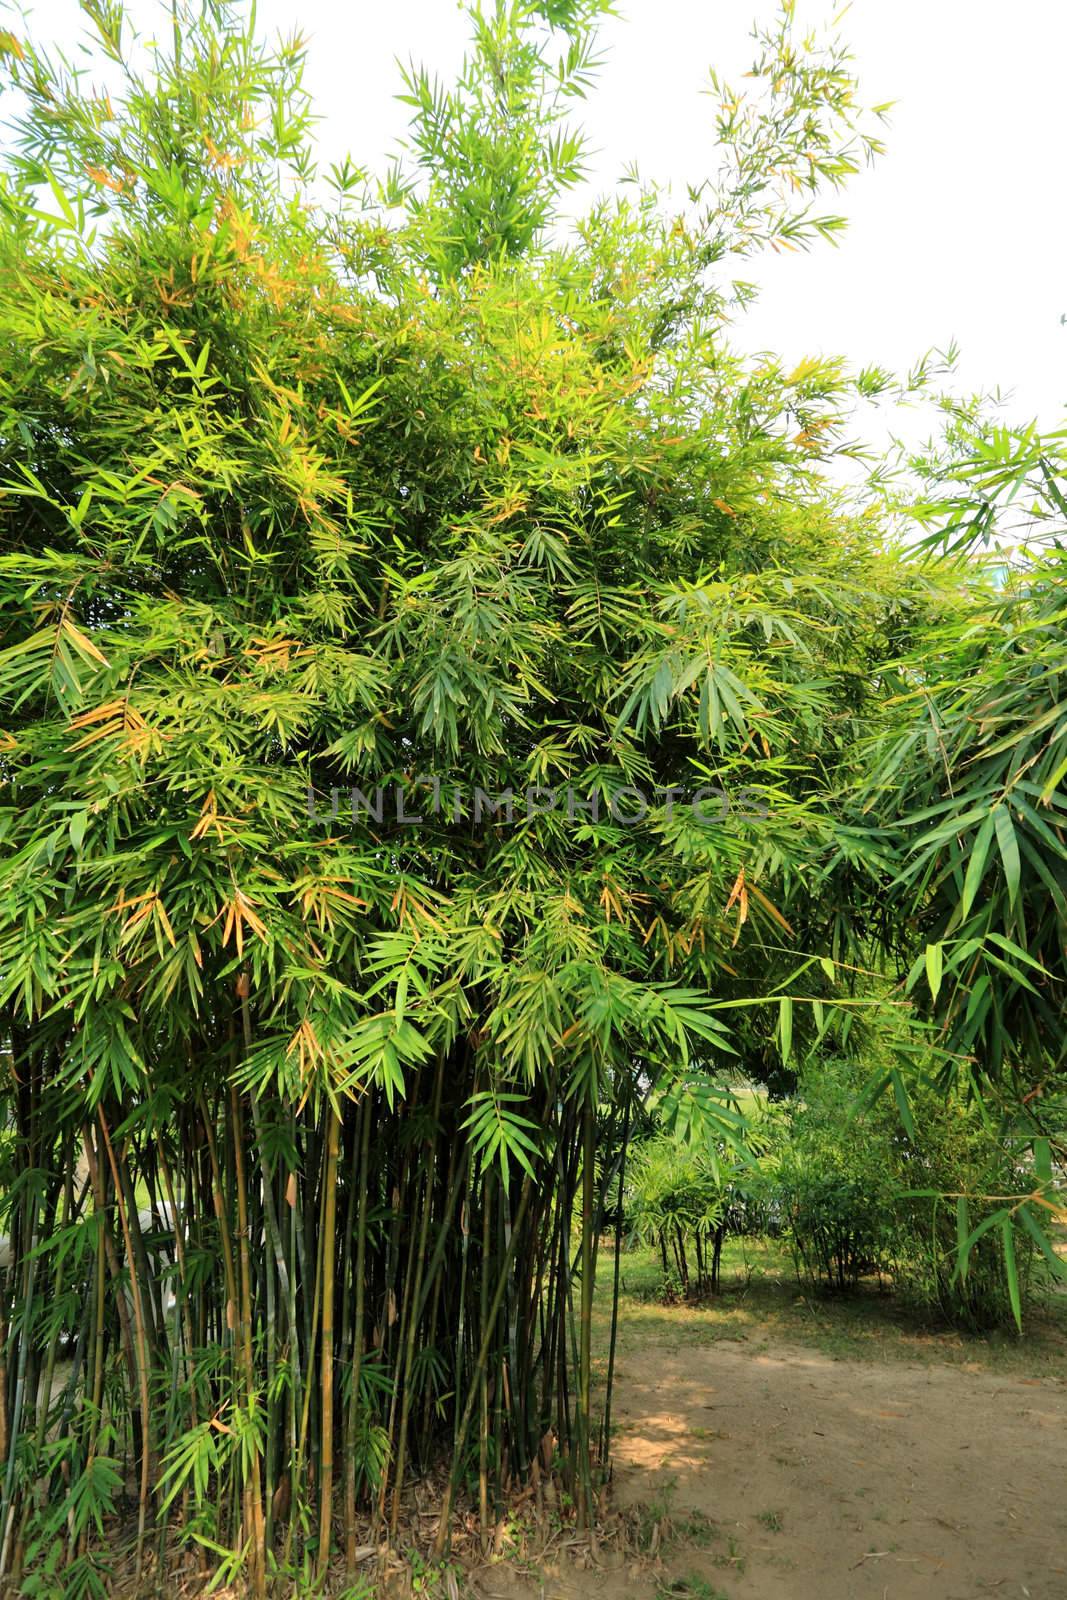 Bamboo by leungchopan